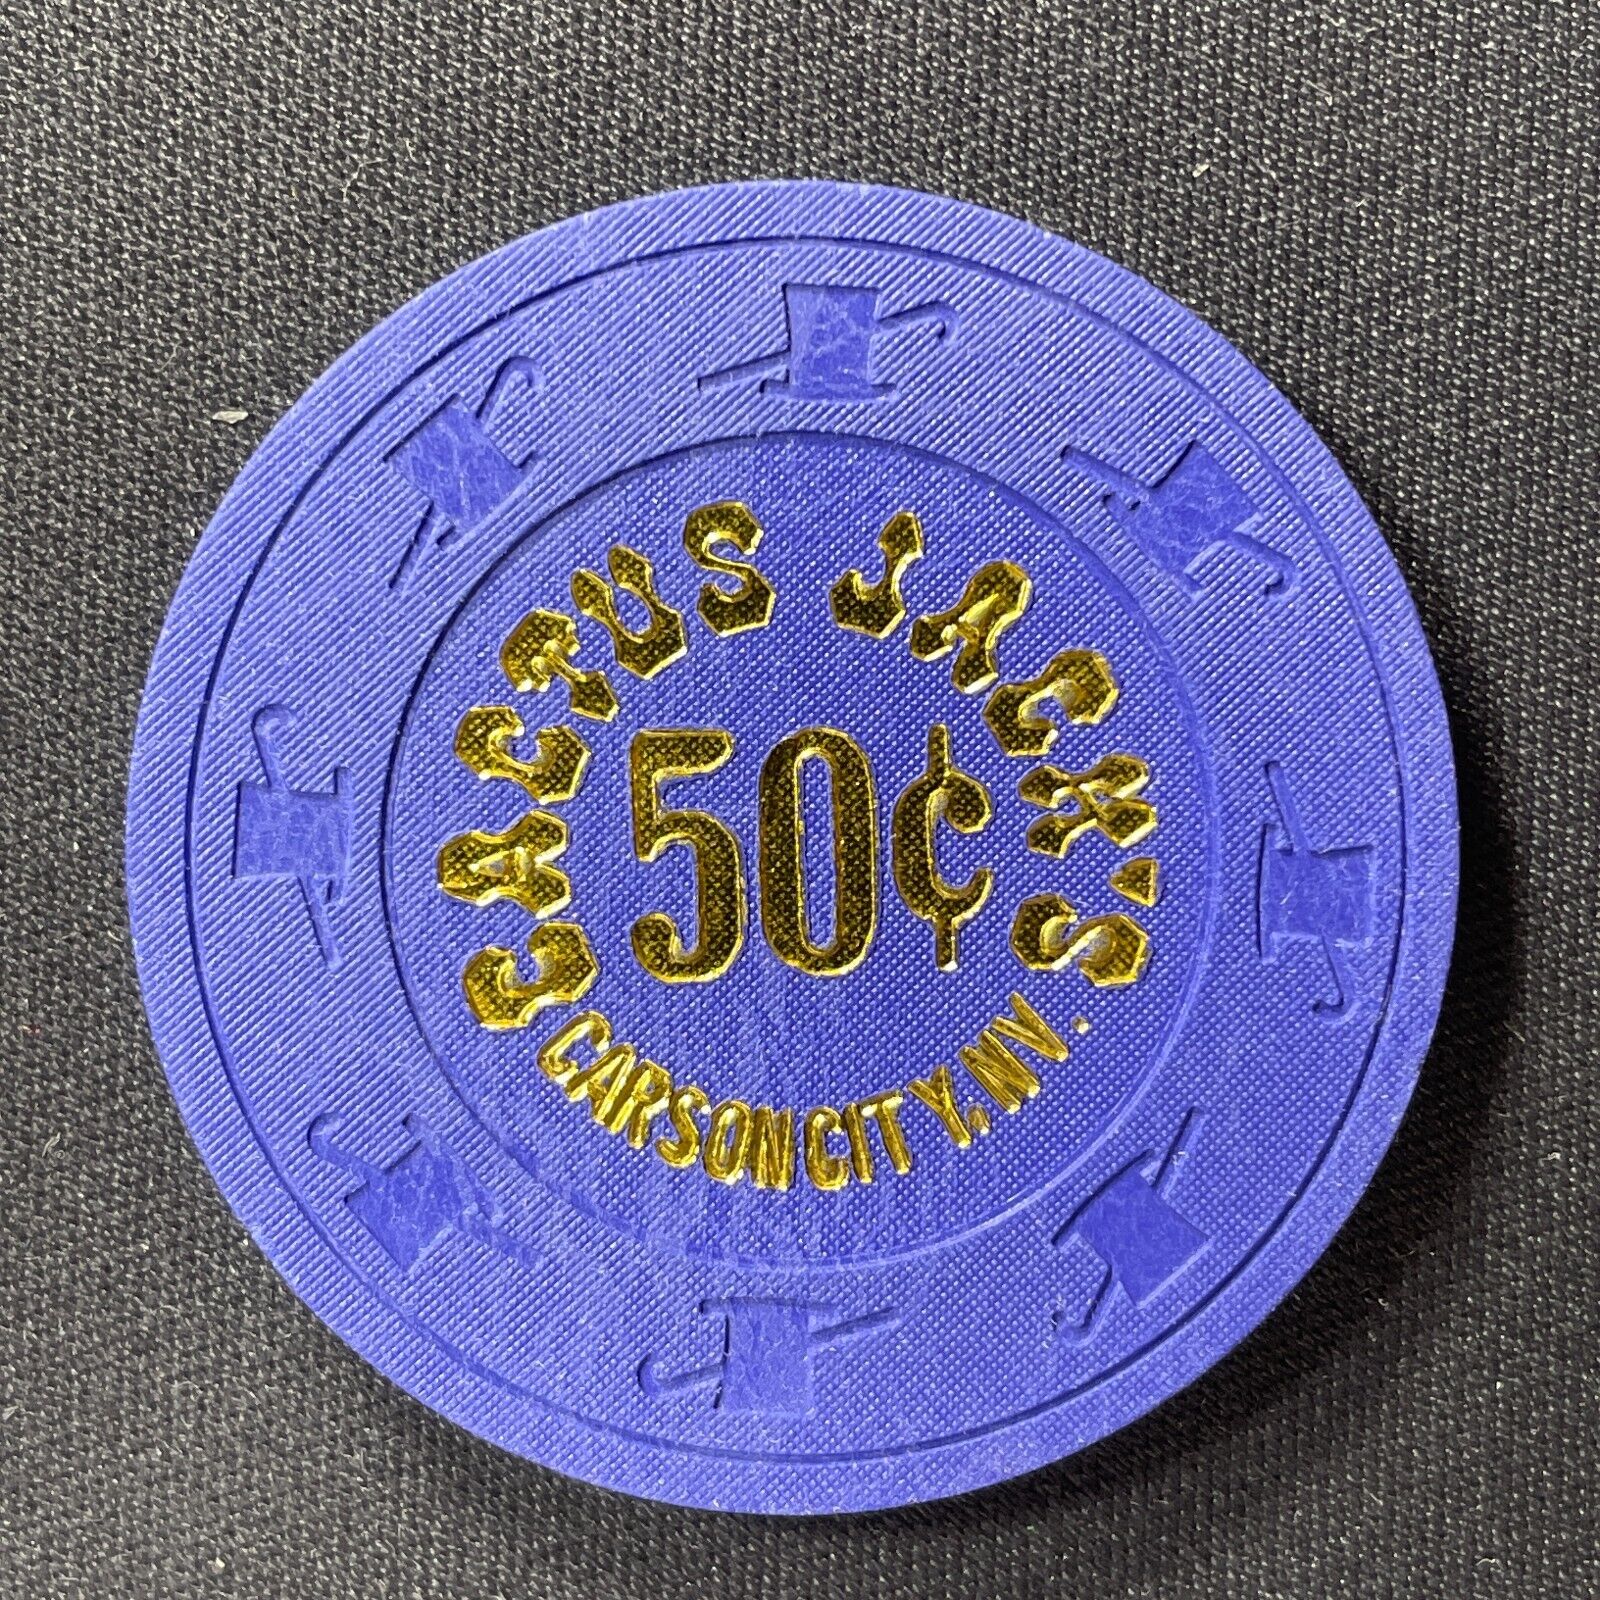 Cactus Jack\'s Carson City Nevada 50 cent casino chip obsolete fractional Mfrac